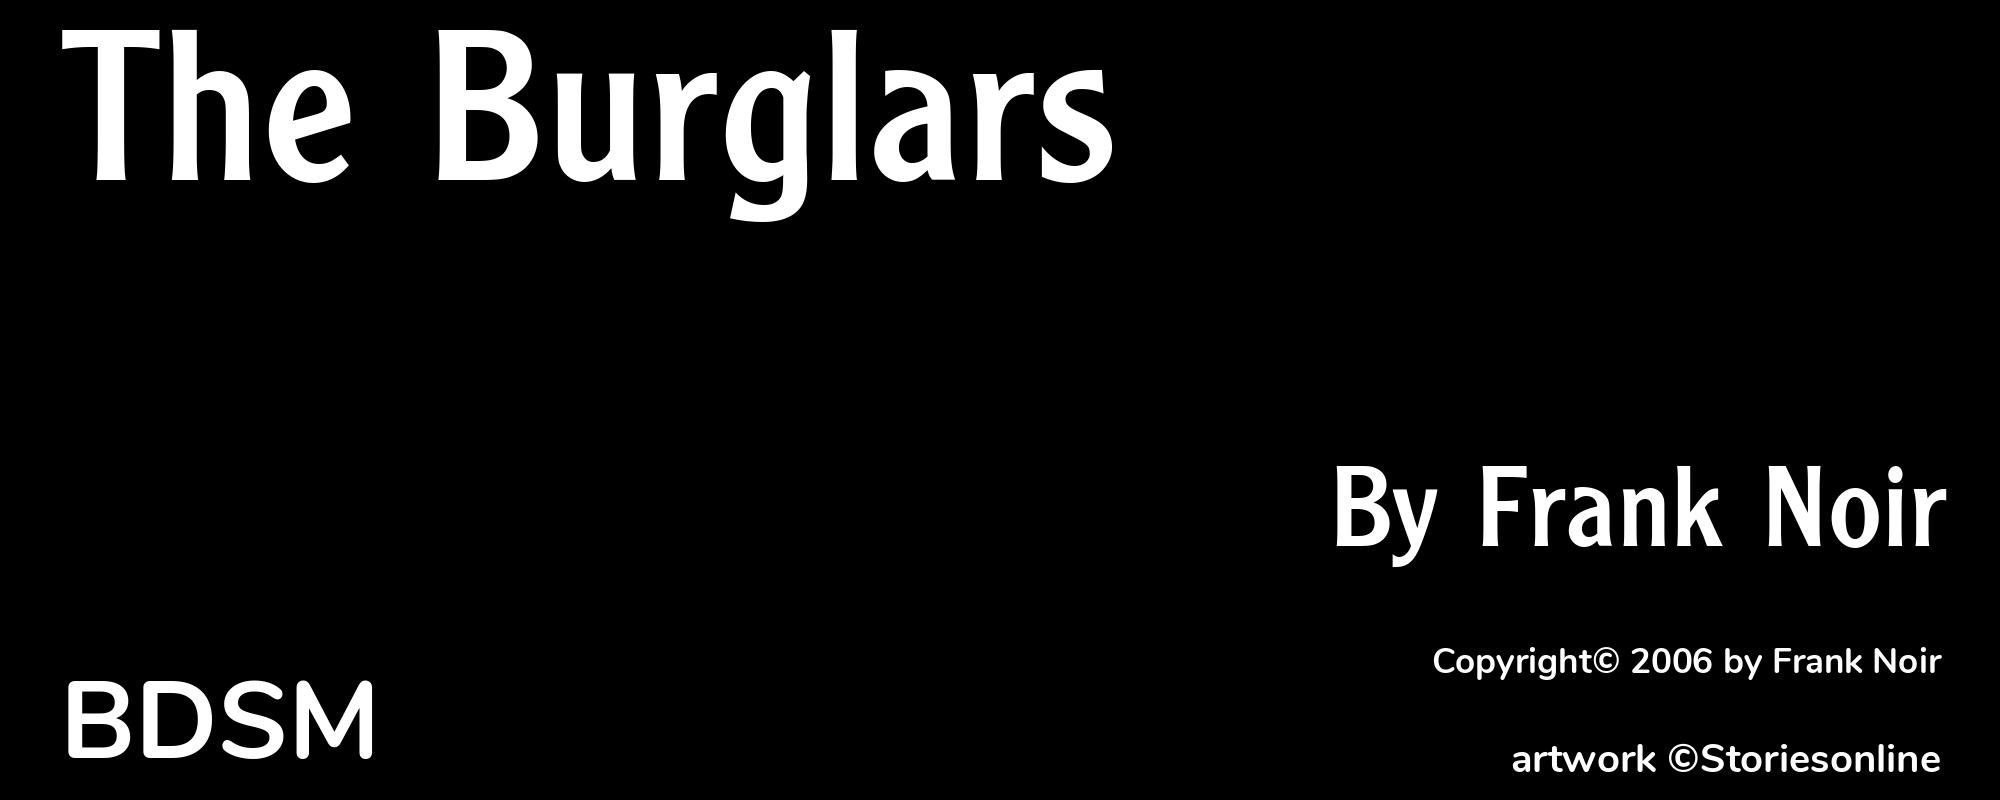 The Burglars - Cover